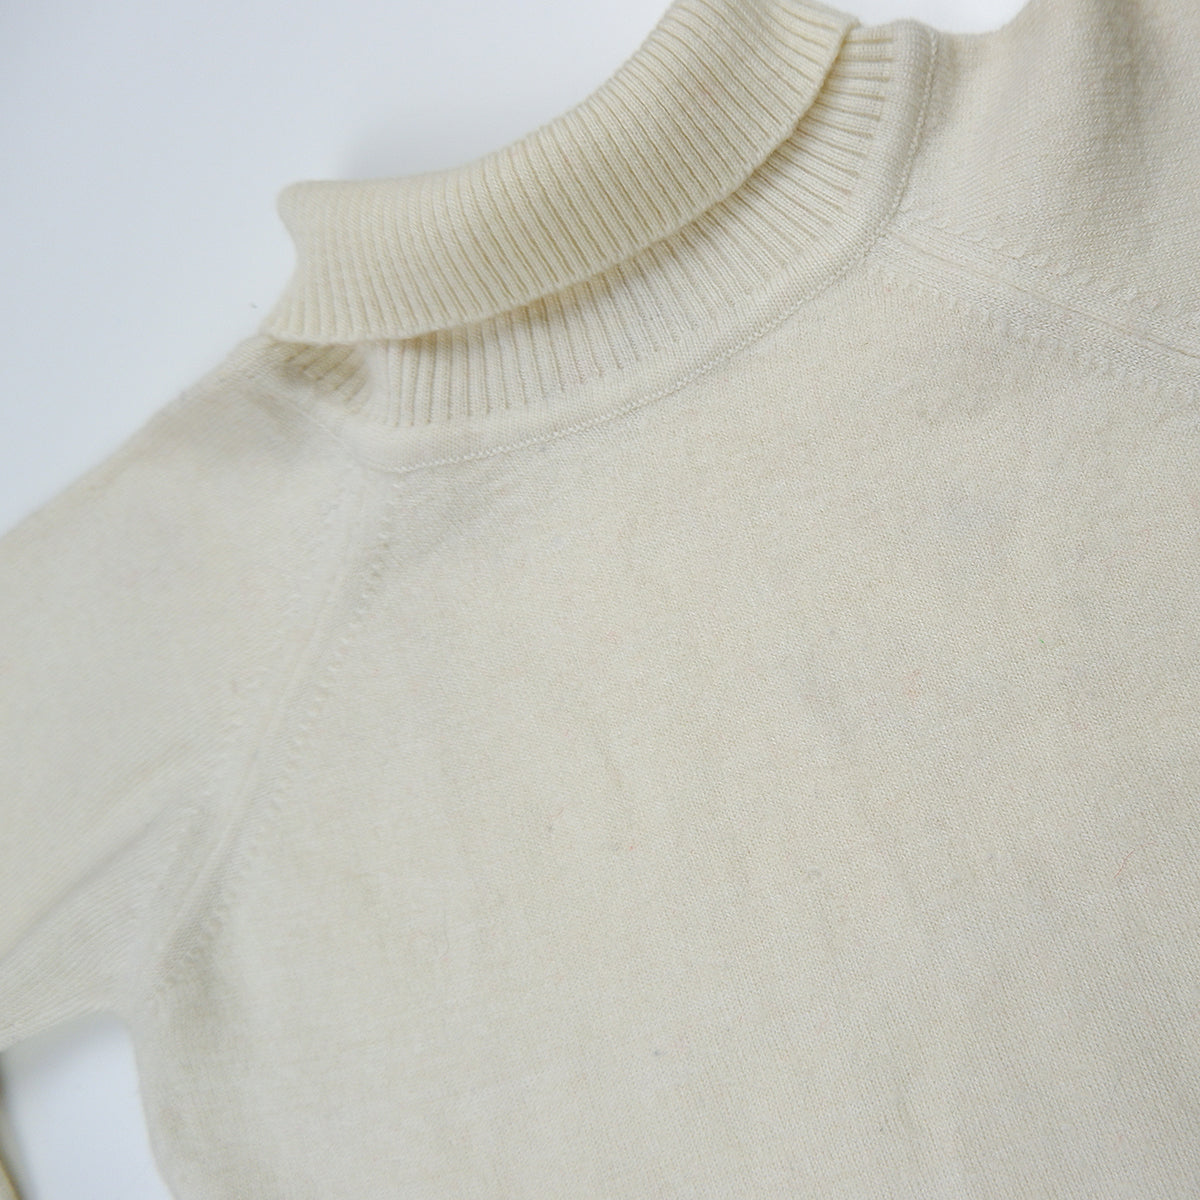 Vintage turtleneck sweater